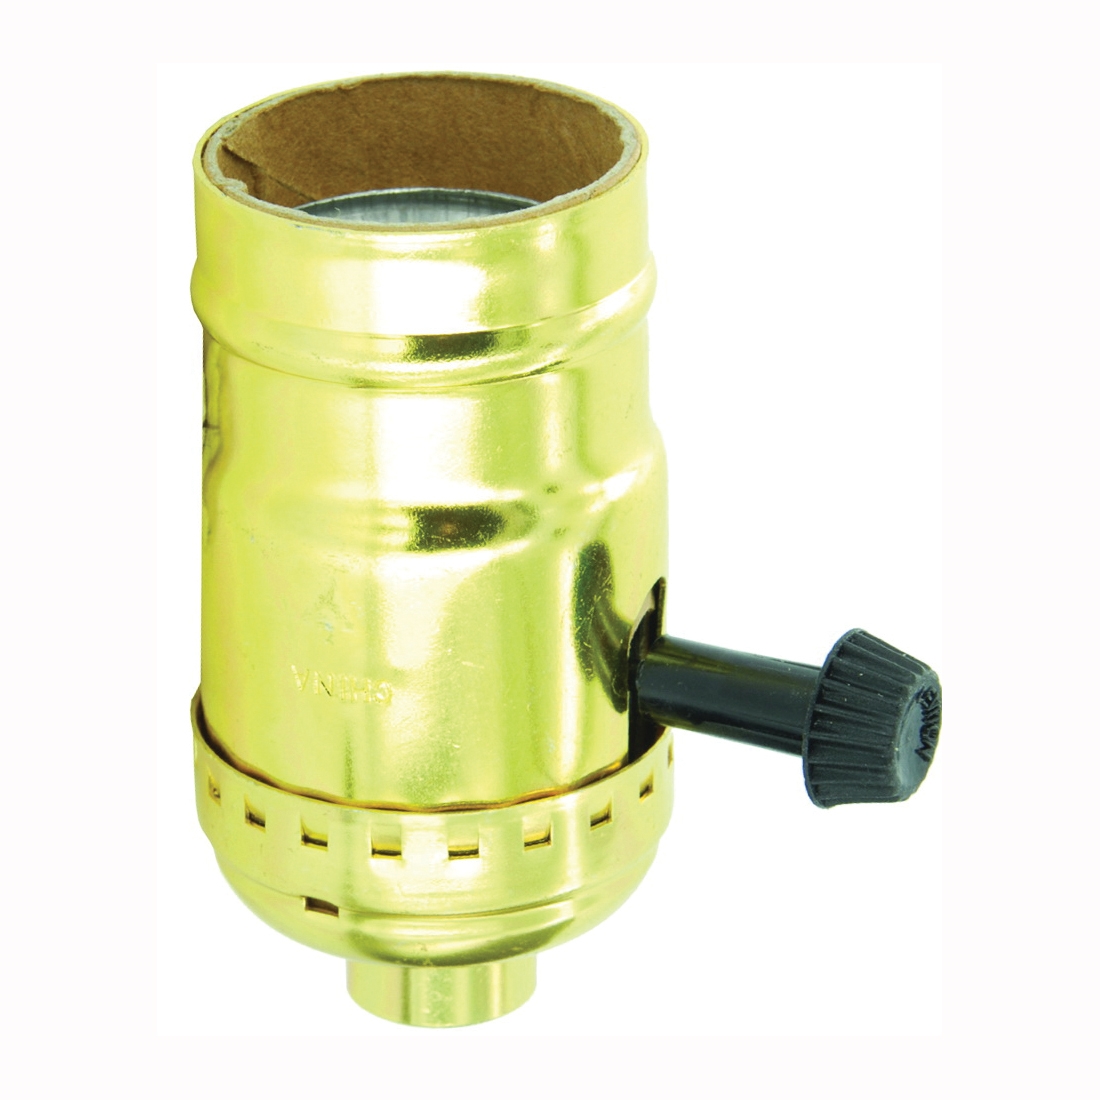 Leviton 7070-PG Lamp Holder, 250 V, 250 W, Phenolic Housing Material, Brass - 1